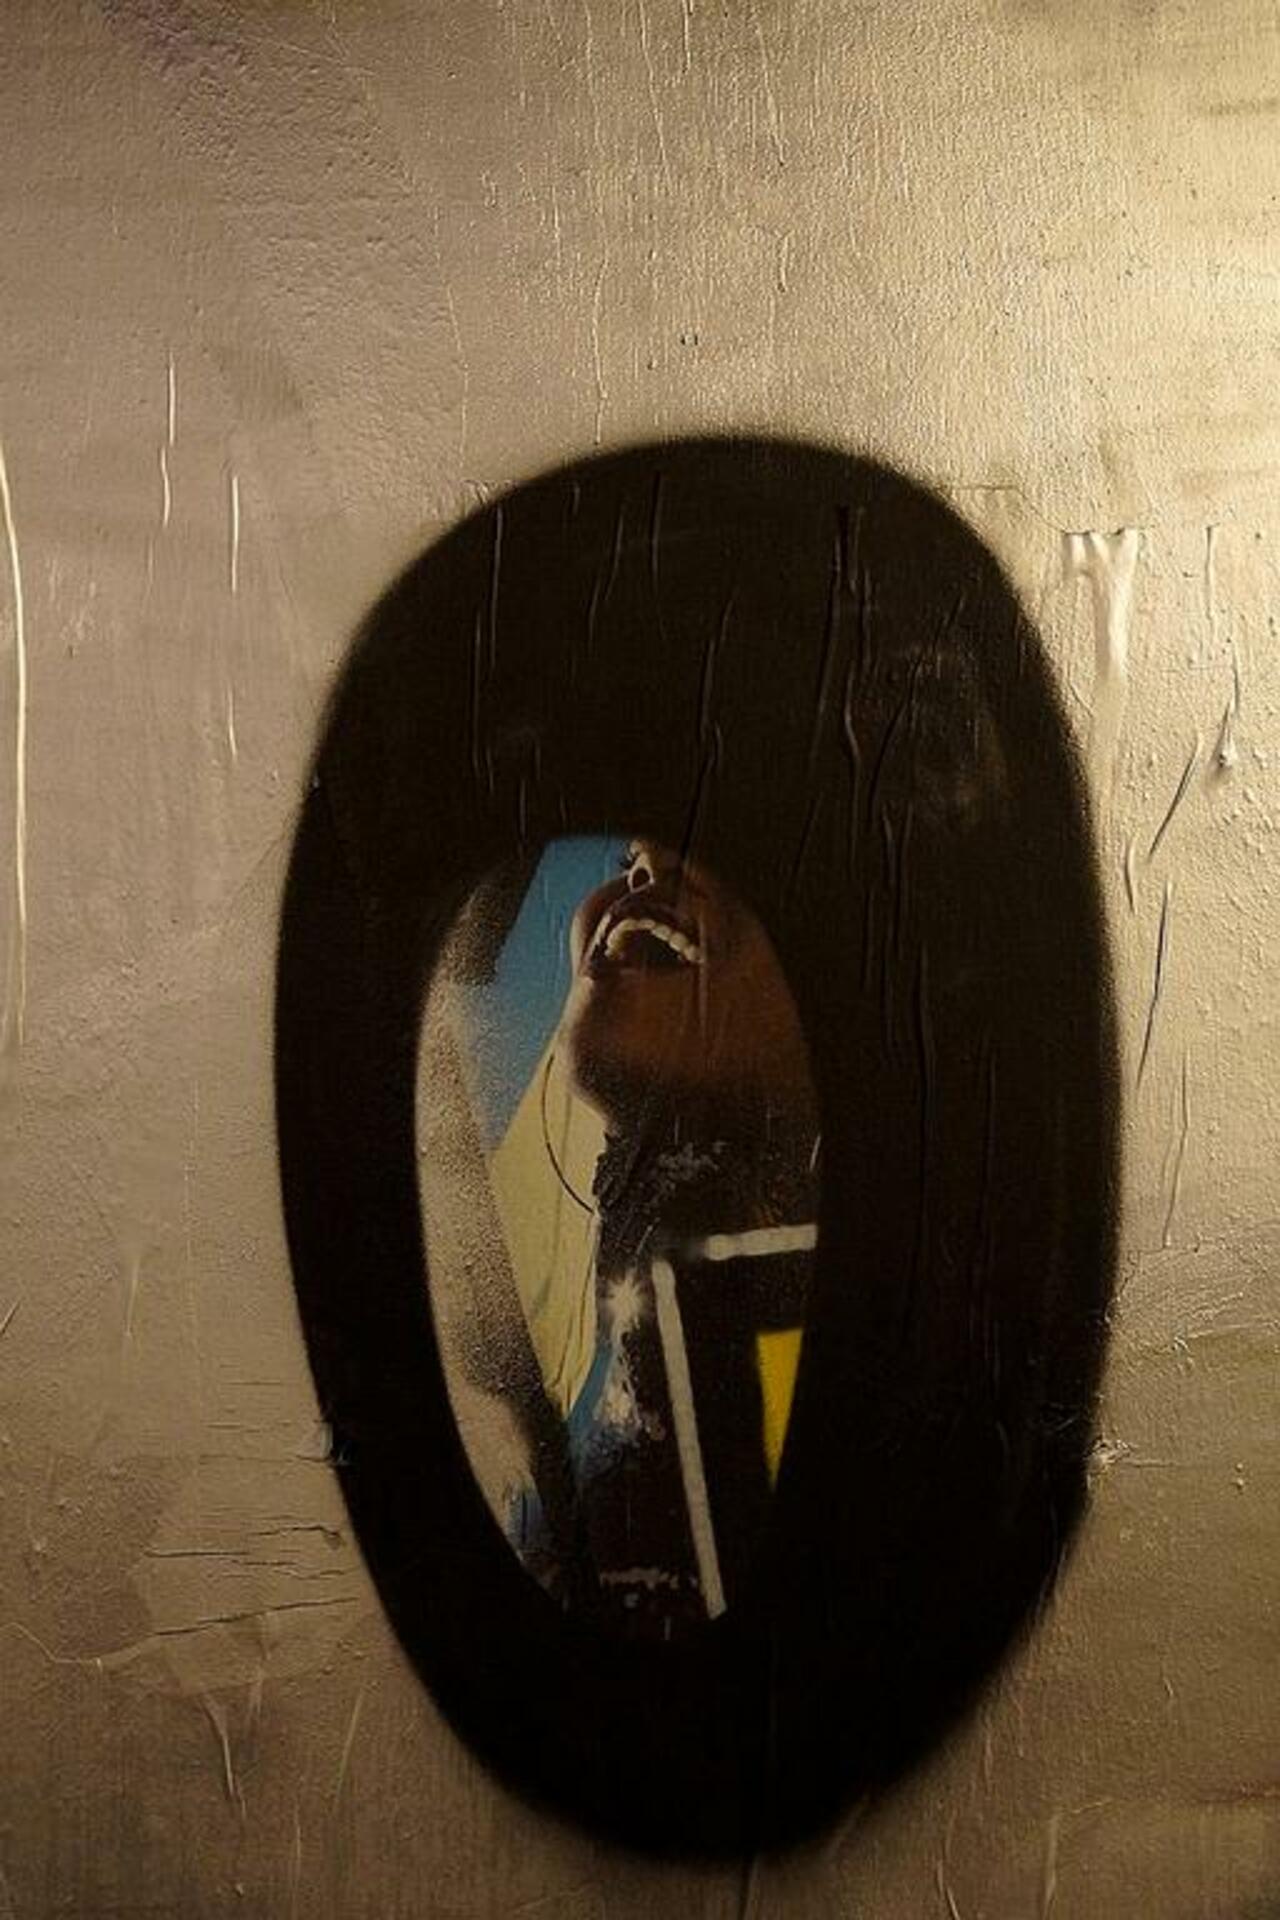 RT @urbacolors: Street Art by anonymous in #Paris http://www.urbacolors.com #art #mural #graffiti #streetart http://t.co/sZRW9BrEpa